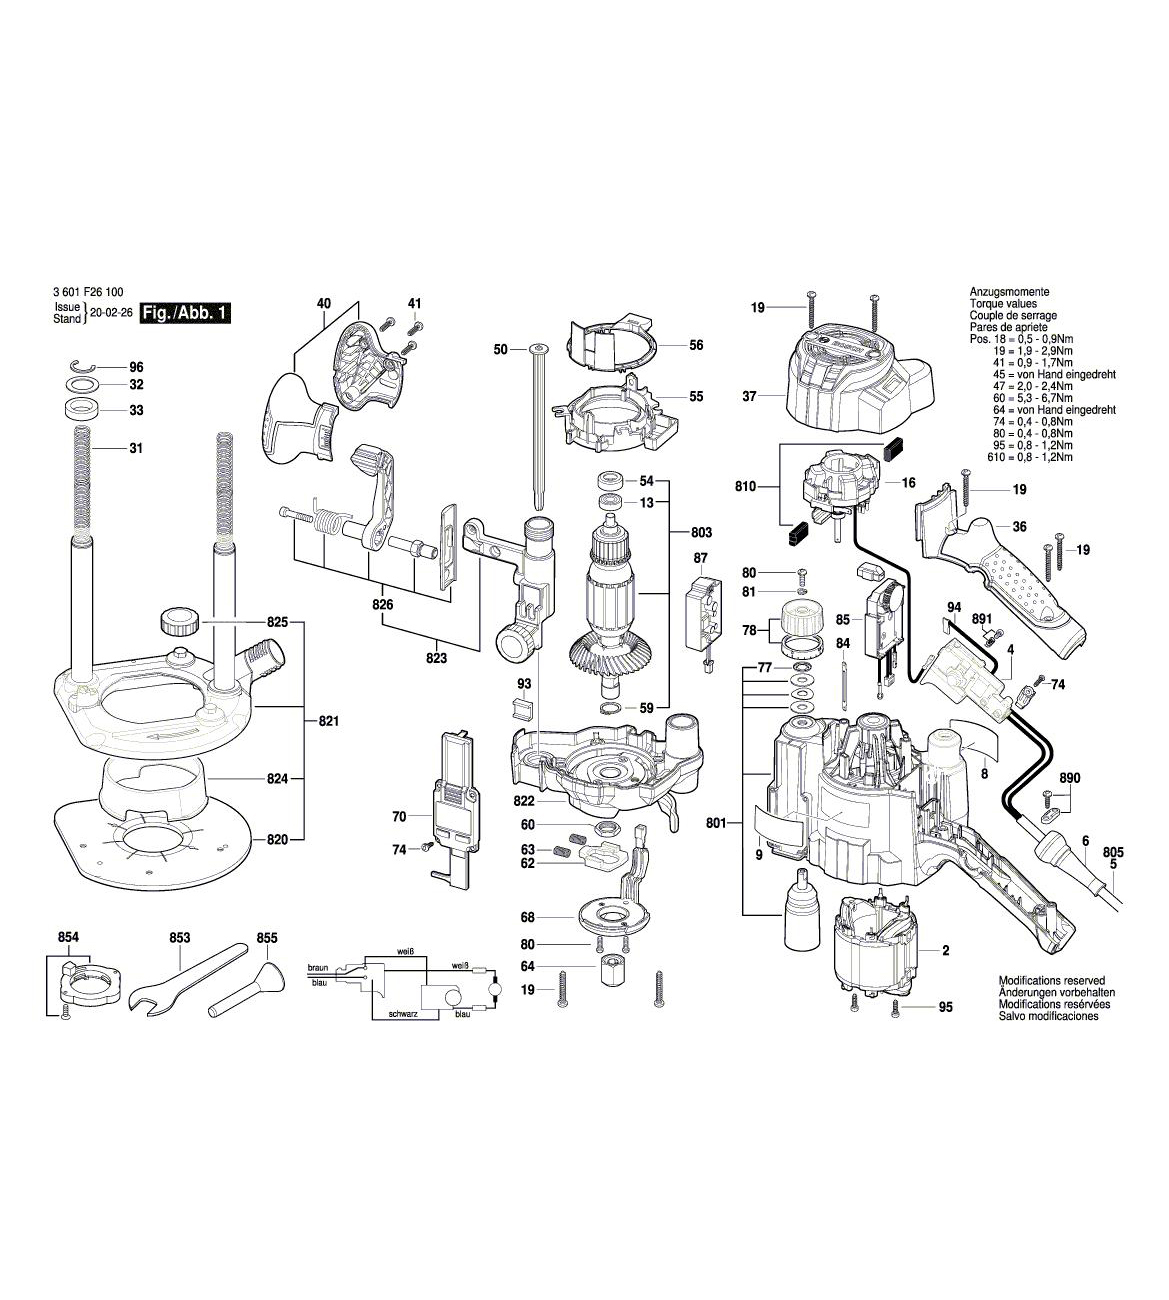 Схема на Фрезер Bosch GOF 1250 LCE (3 601 F26 100)